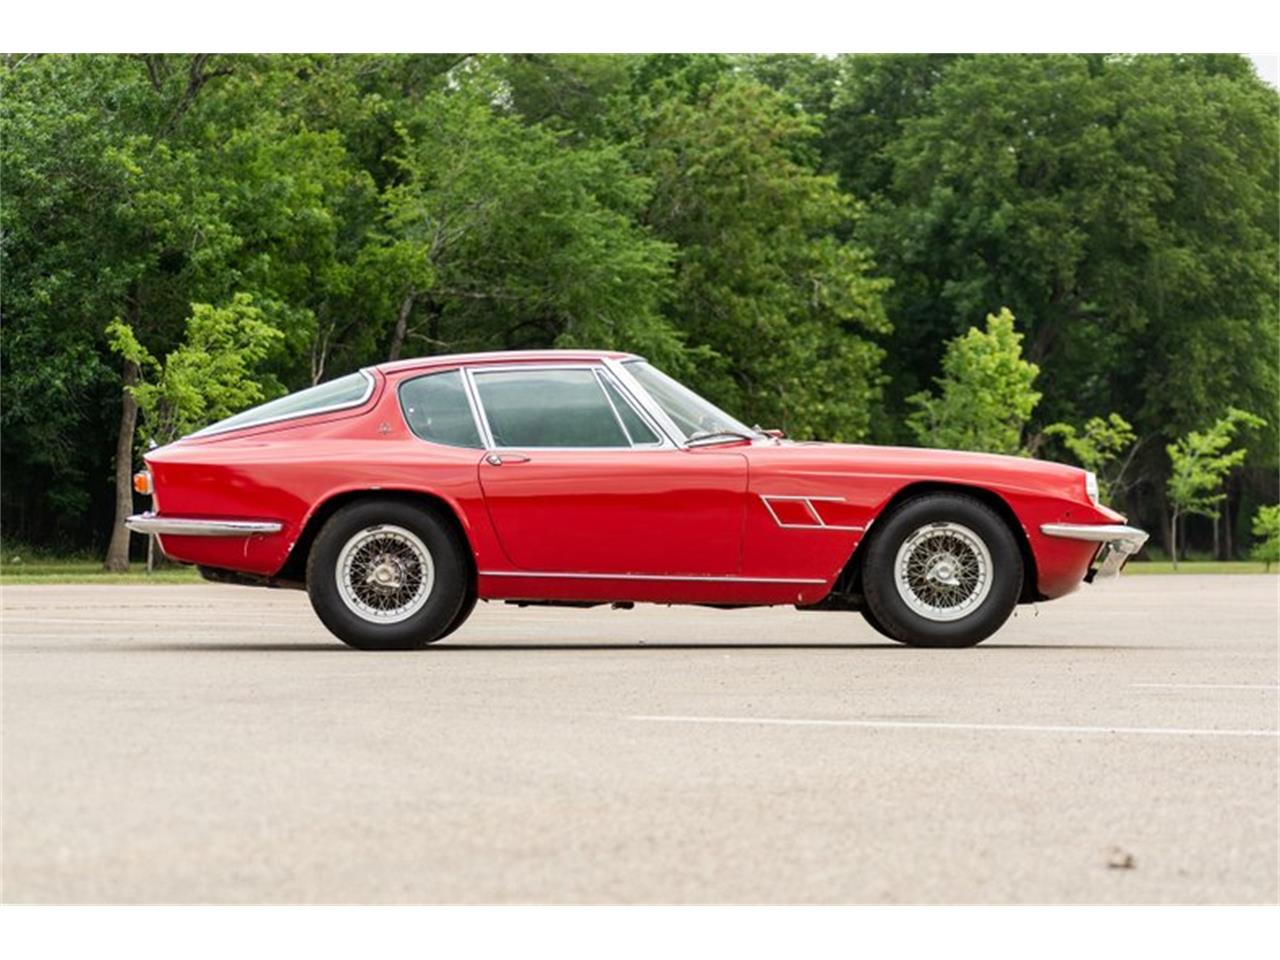 1967 Maserati Mistral for sale in Houston, TX ...